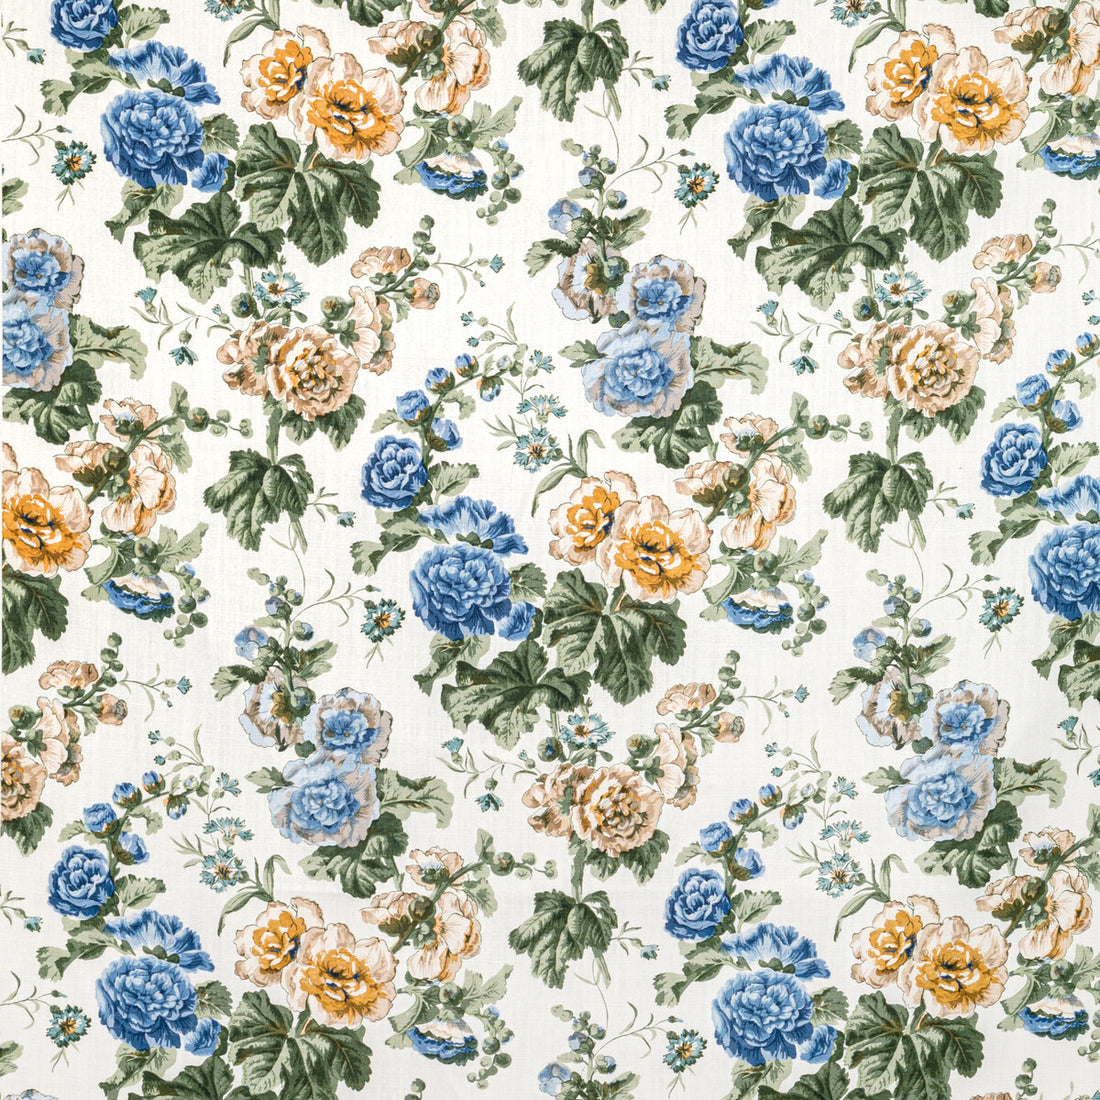 Upton Linen fabric in ivory/capri color - pattern 2020222.31.0 - by Lee Jofa in the Oscar De La Renta IV collection